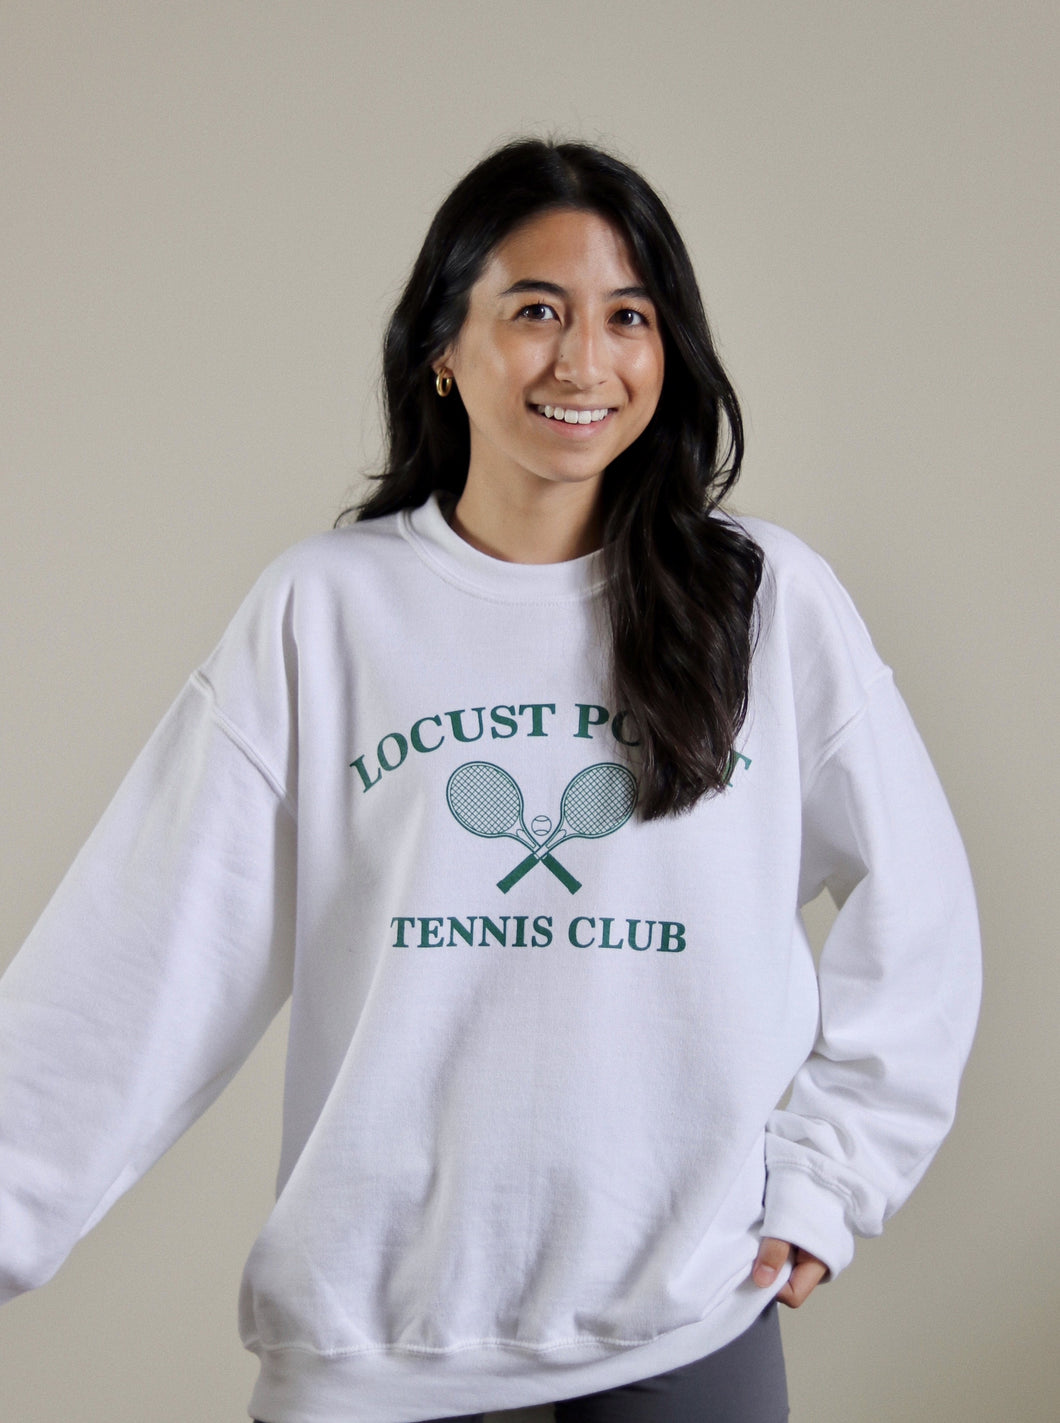 Locust Point Tennis Club Crewneck Sweatshirt